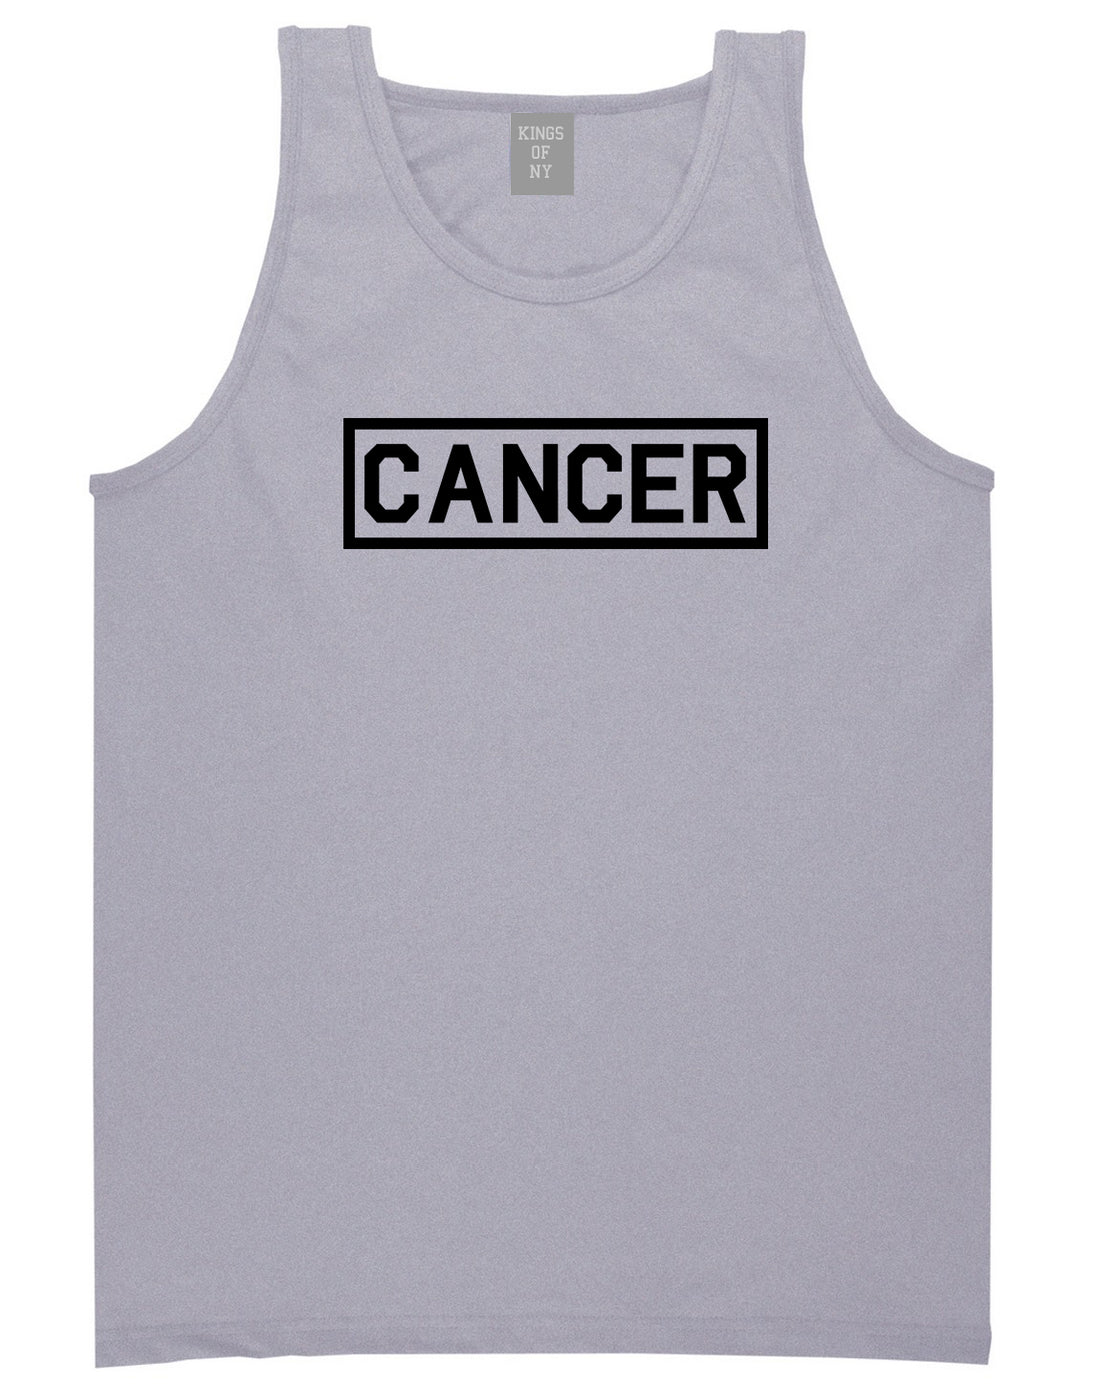 Cancer Horoscope Sign Mens Grey Tank Top Shirt by KINGS OF NY